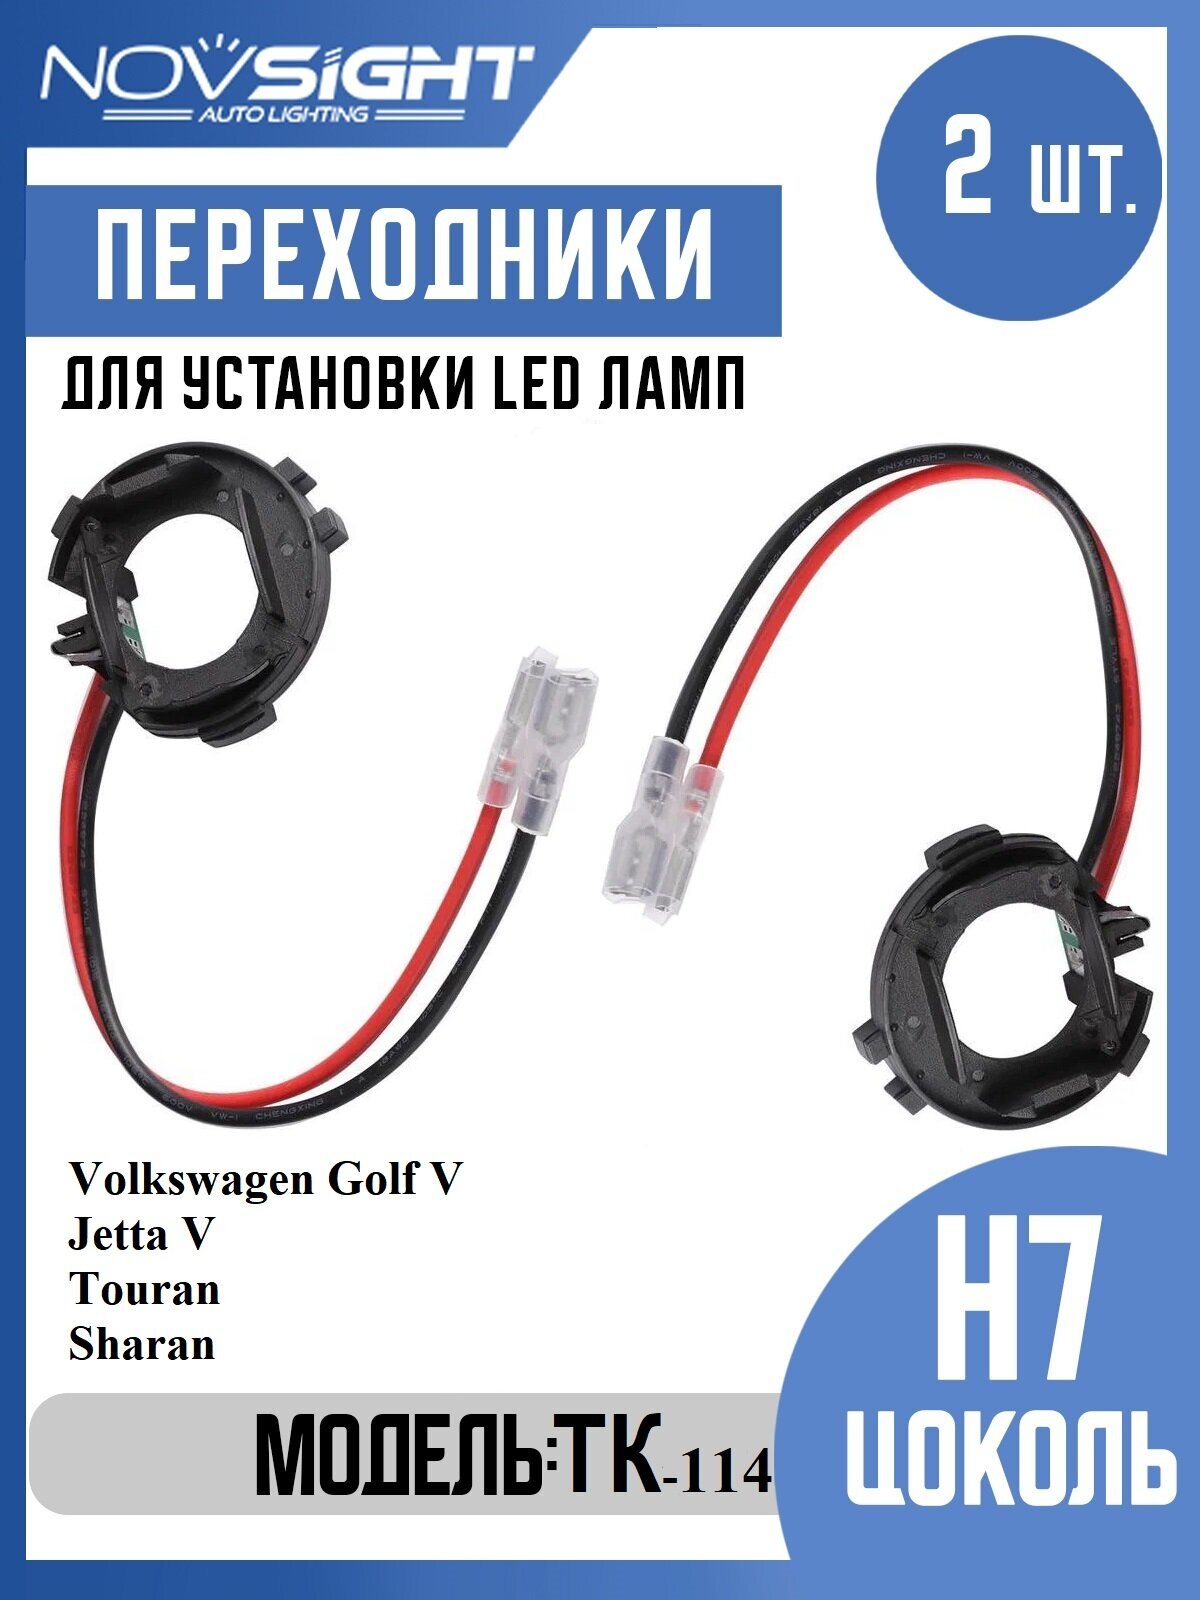 Переходник адаптер Novsight для светодиодных ламп H7 цоколь PX26d на Volkswagen Golf V Jetta V Touran Sharan 2шт TK-114